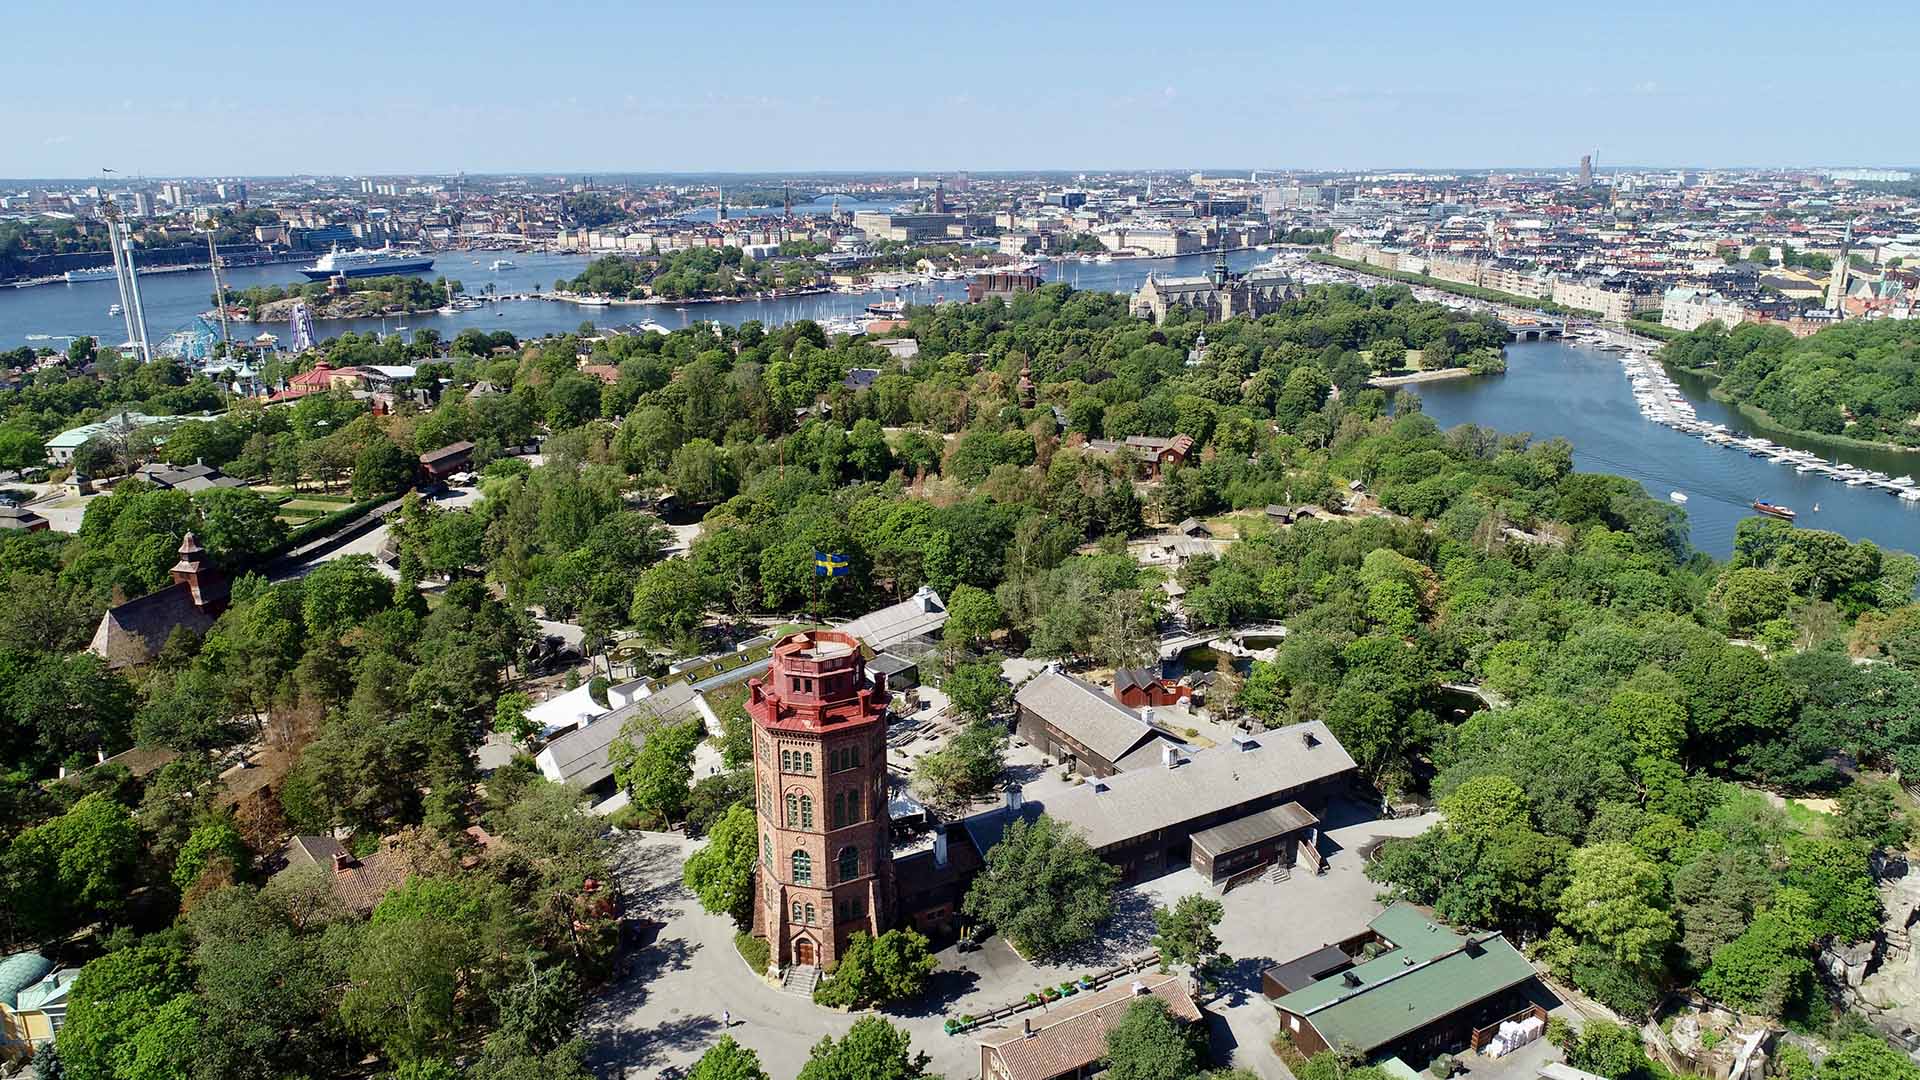 Photo Credit: Royal Djurgården Stockholm innovative city park